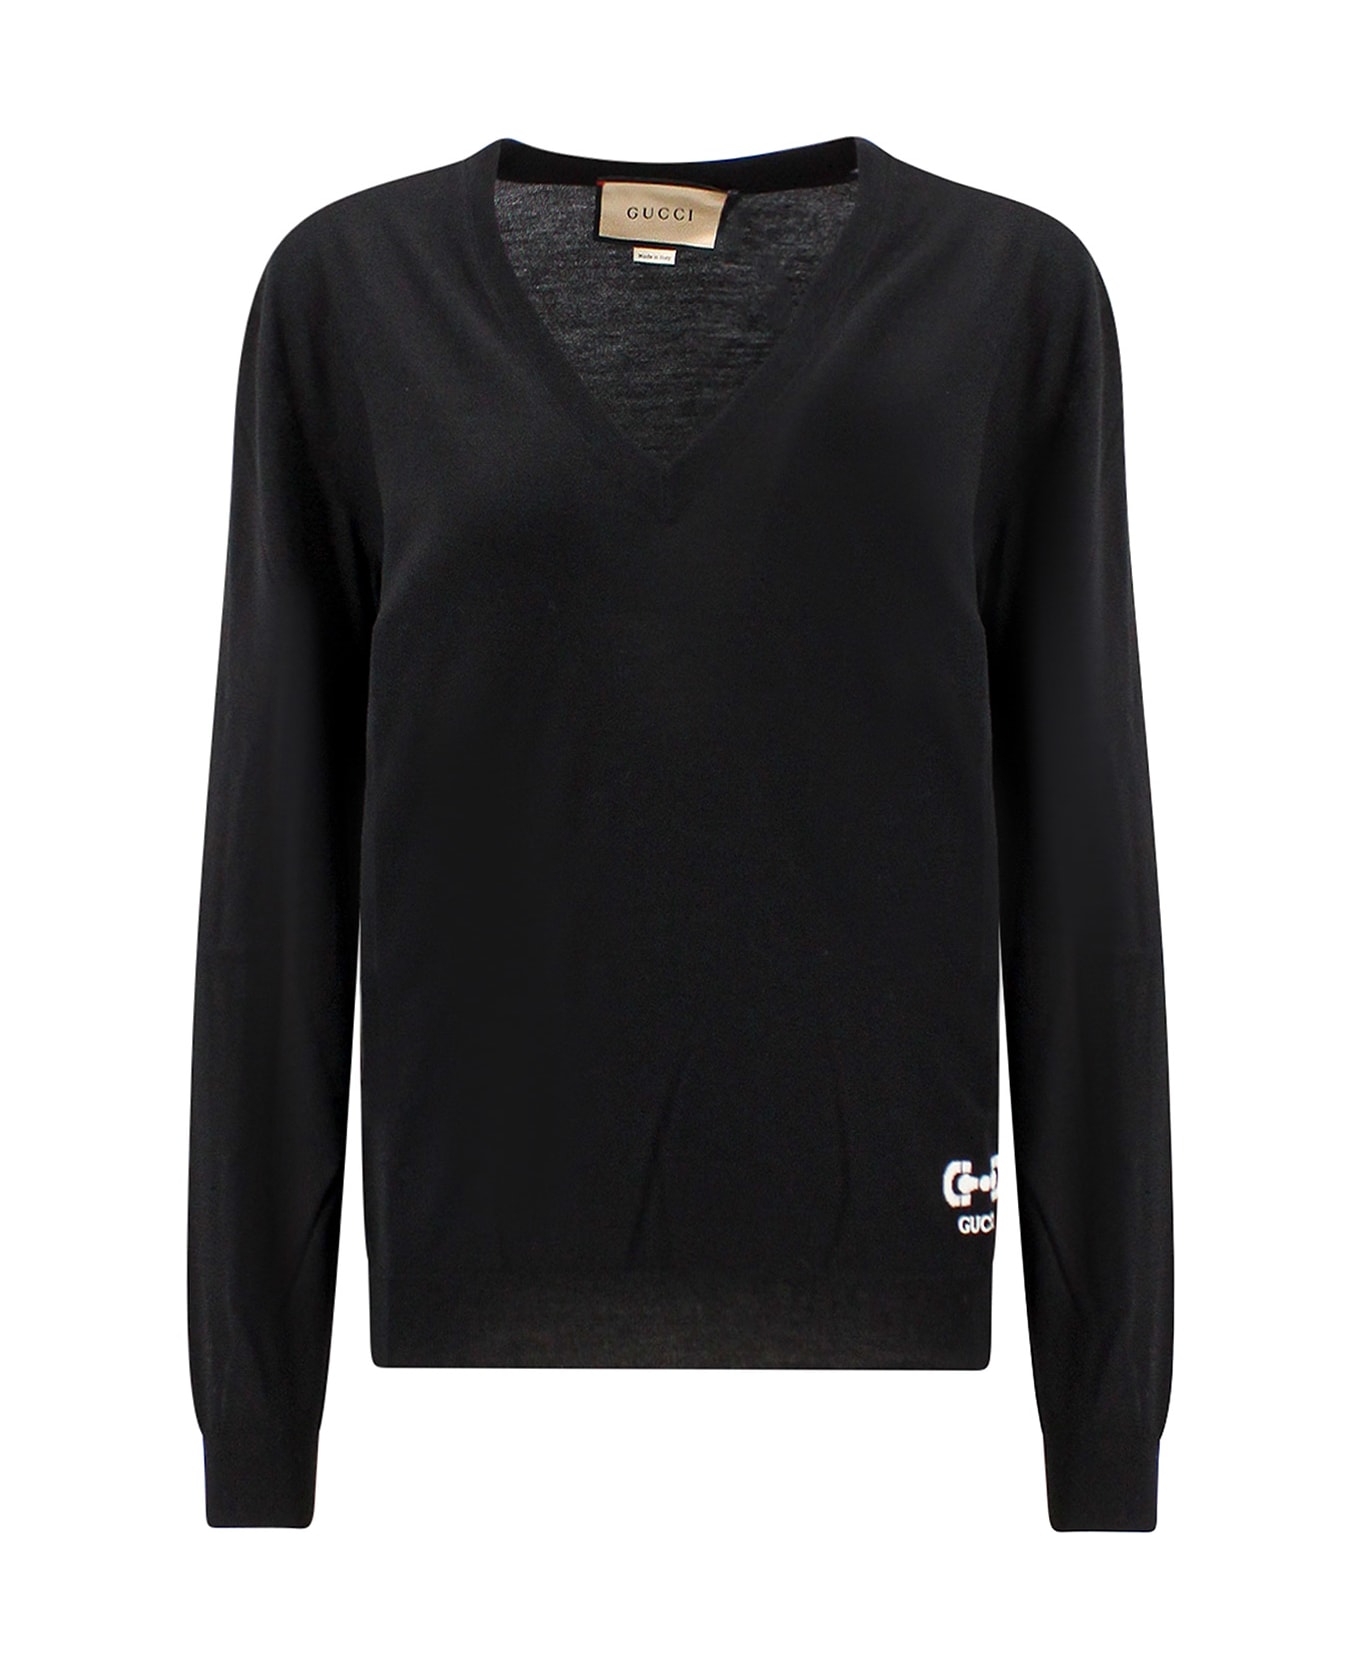 Gucci Sweater - Black ニットウェア